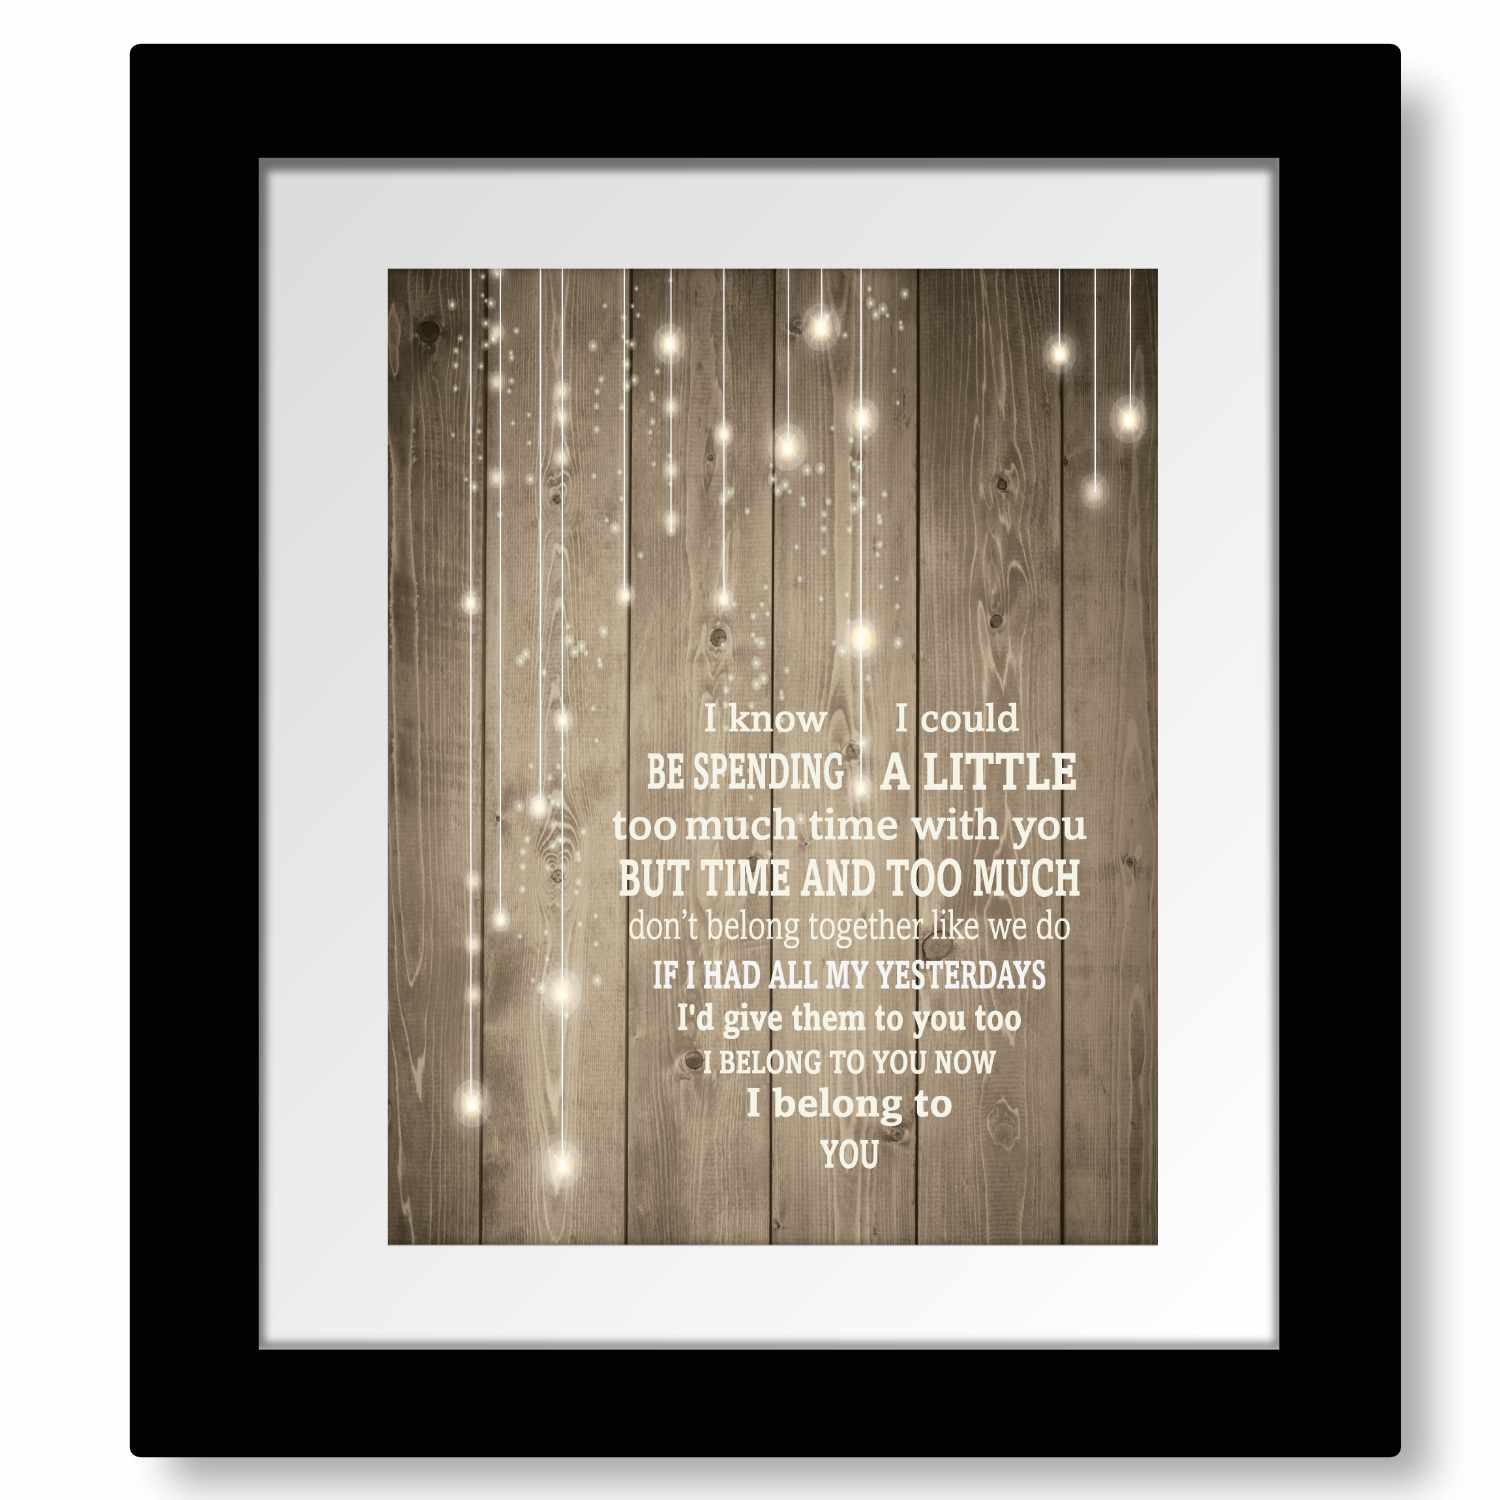 I Belong to You by Brandi Carlile - Song Lyric Art Print Song Lyrics Art Song Lyrics Art 8x10 Matted / Framed Print 